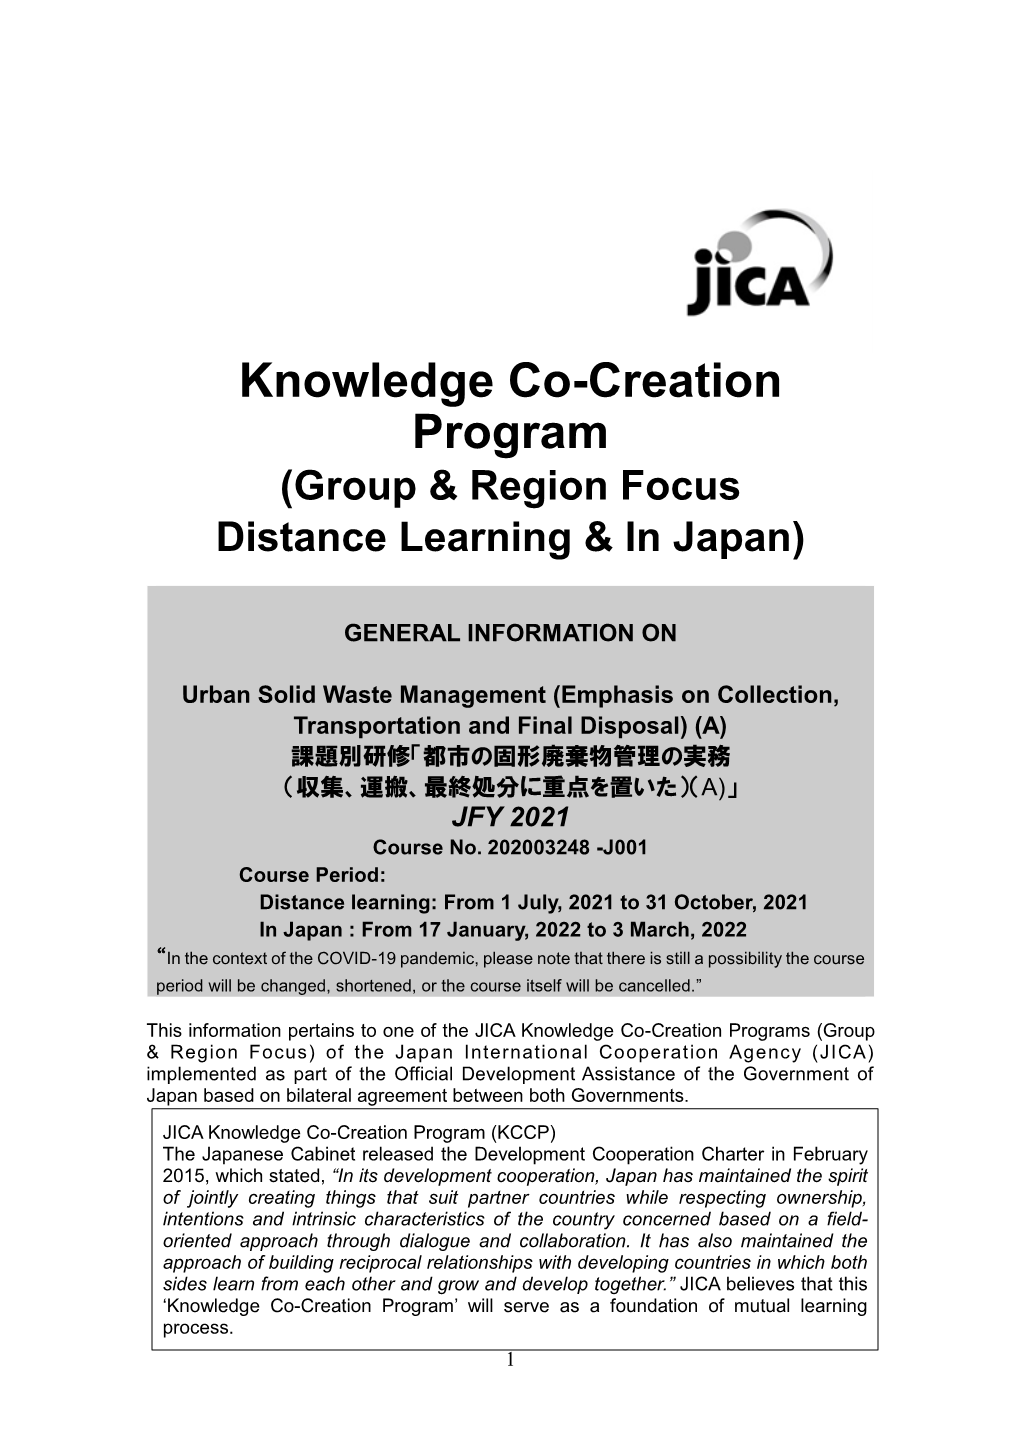 Knowledge Co-Creation Program (Group & Region Focus